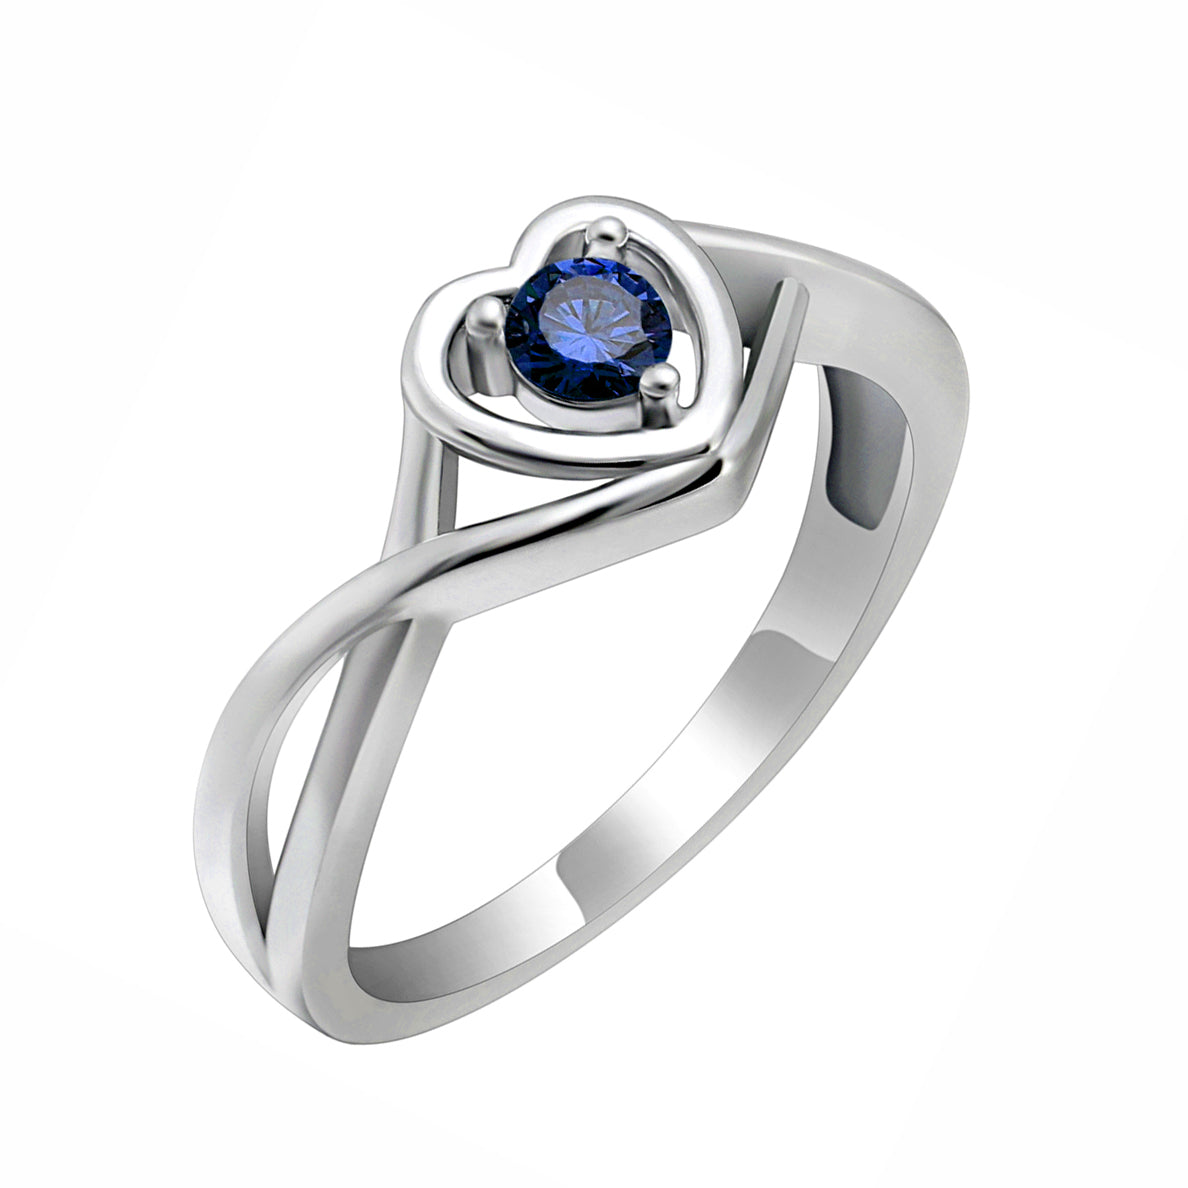 Christine Engagement Ring Promise Heart For Women Silver Cz Ginger Lyne Collection - September Blue,10